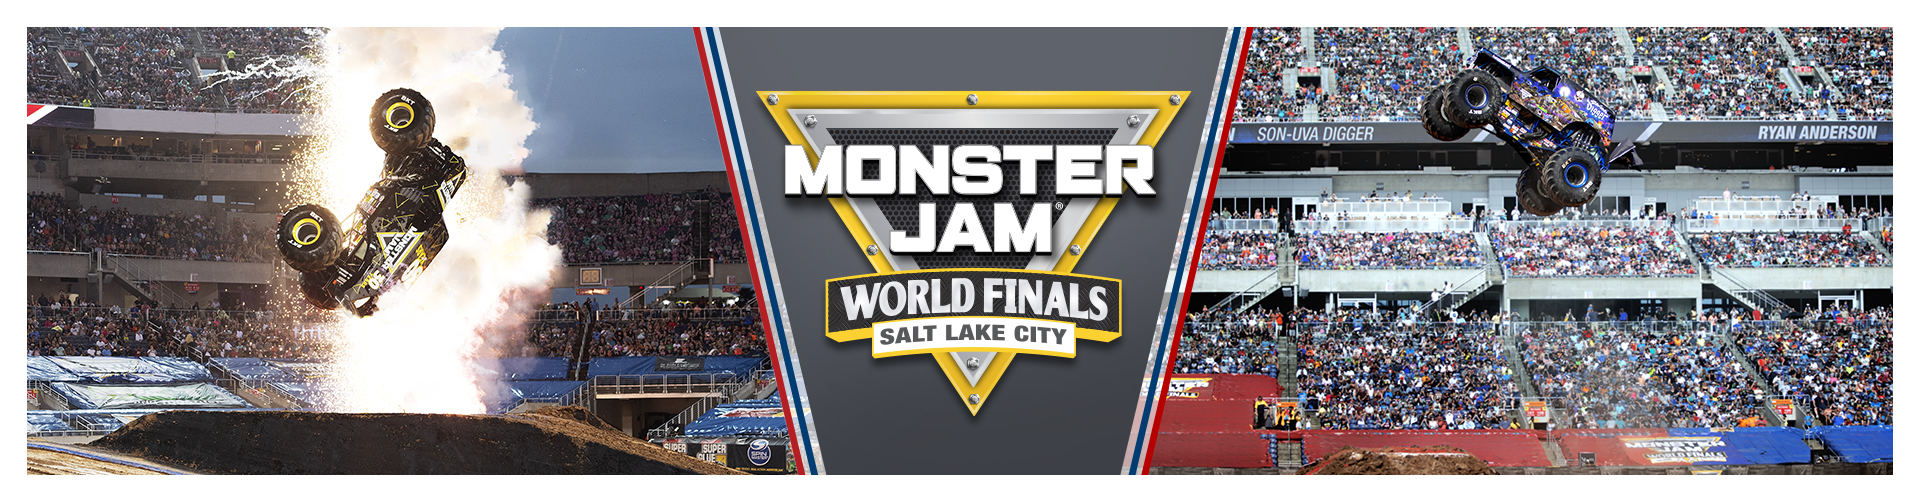 Monster Jam World Finals Salt Lake City logo with images of Monster Jam stunts behind it